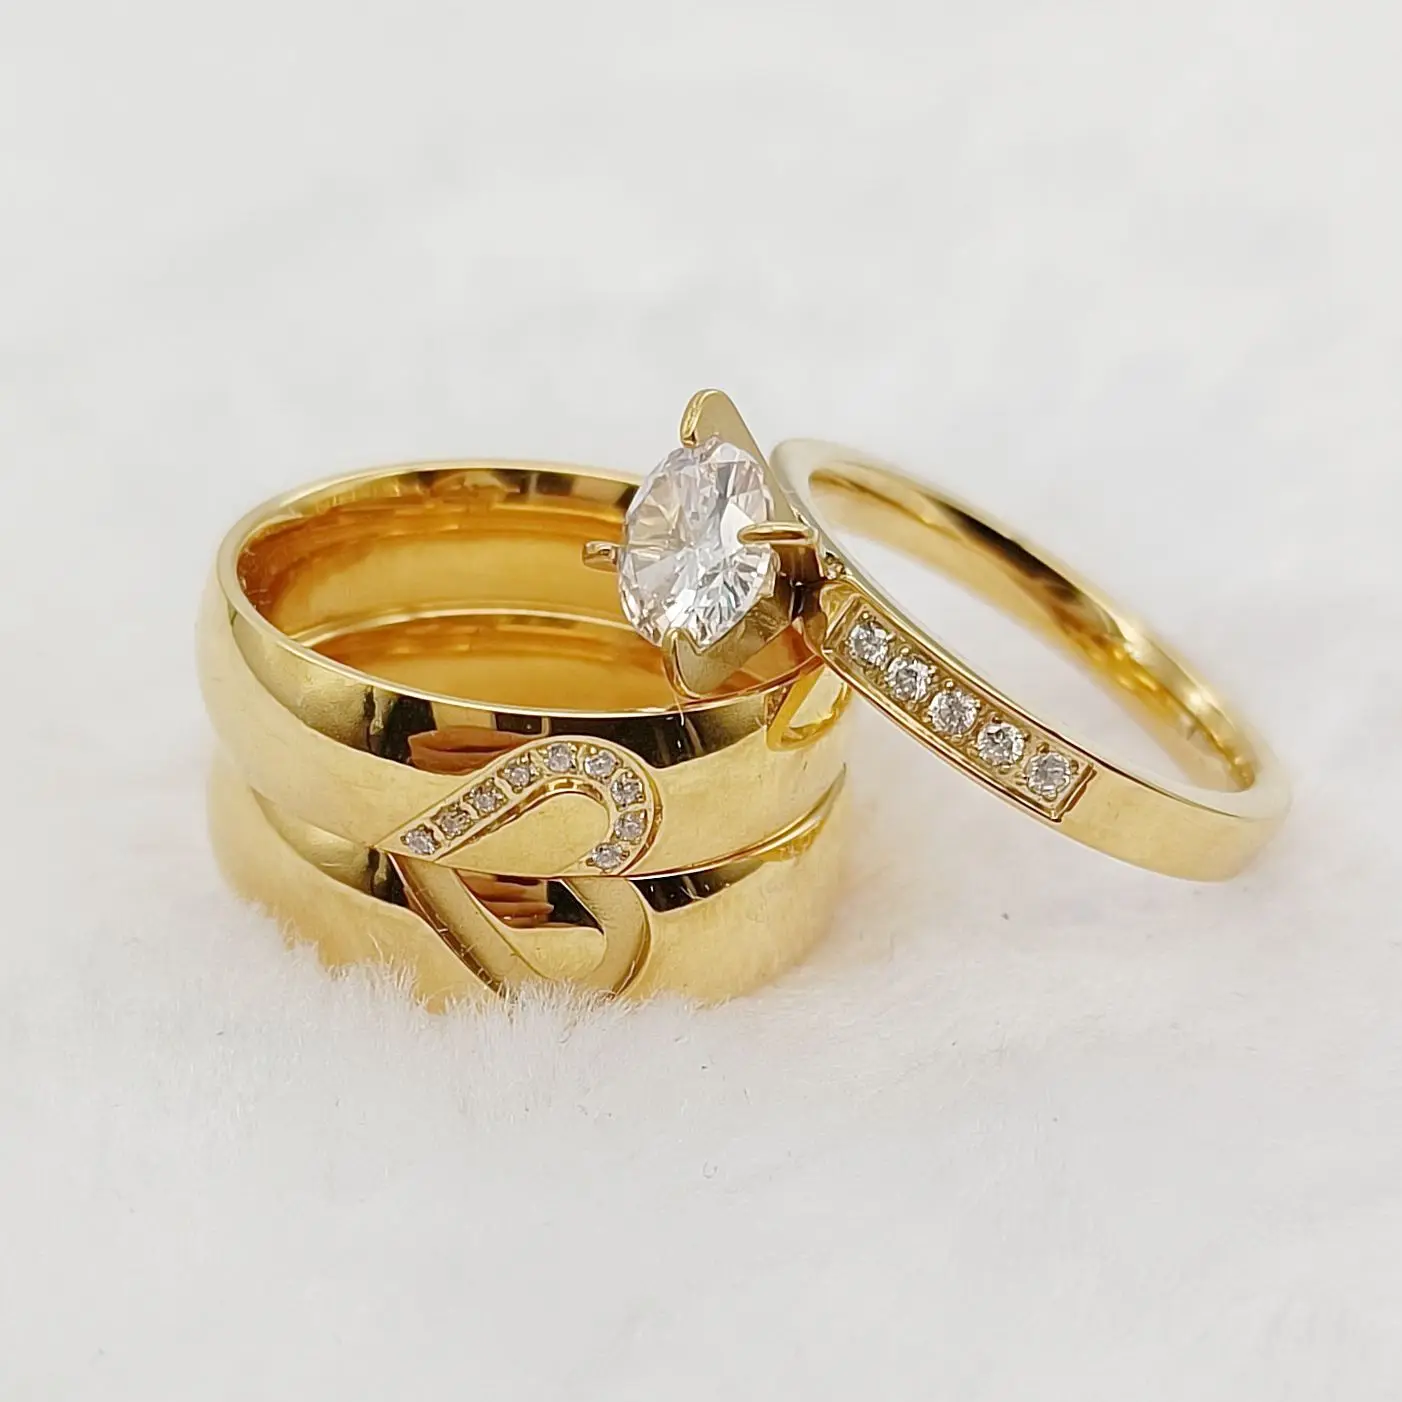 Product Name: couple rings... - Mallika Thanga Maligai | Facebook